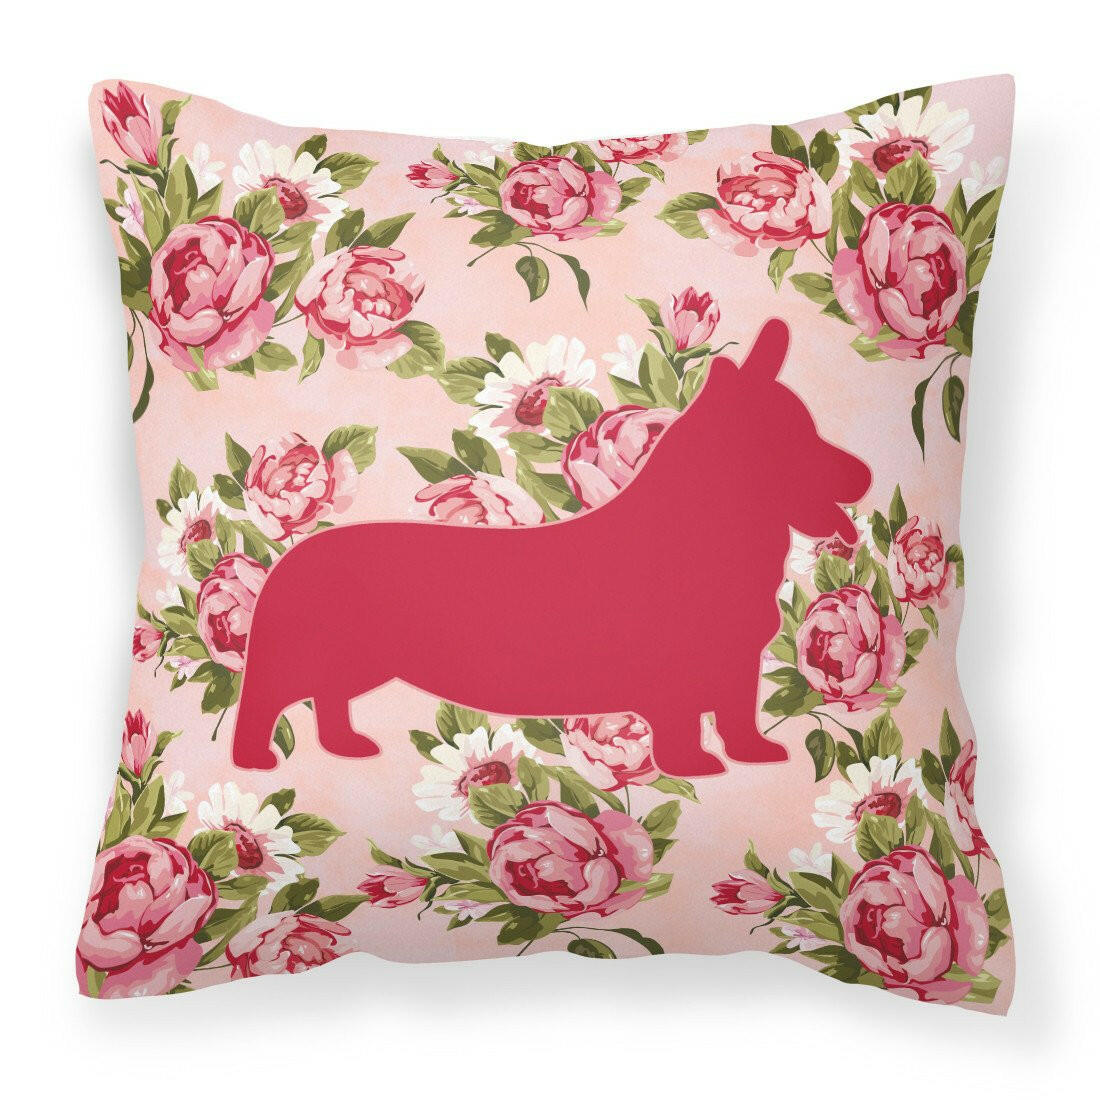 Corgi Shabby Chic Pink Roses  Fabric Decorative Pillow BB1069-RS-PK-PW1414 - the-store.com